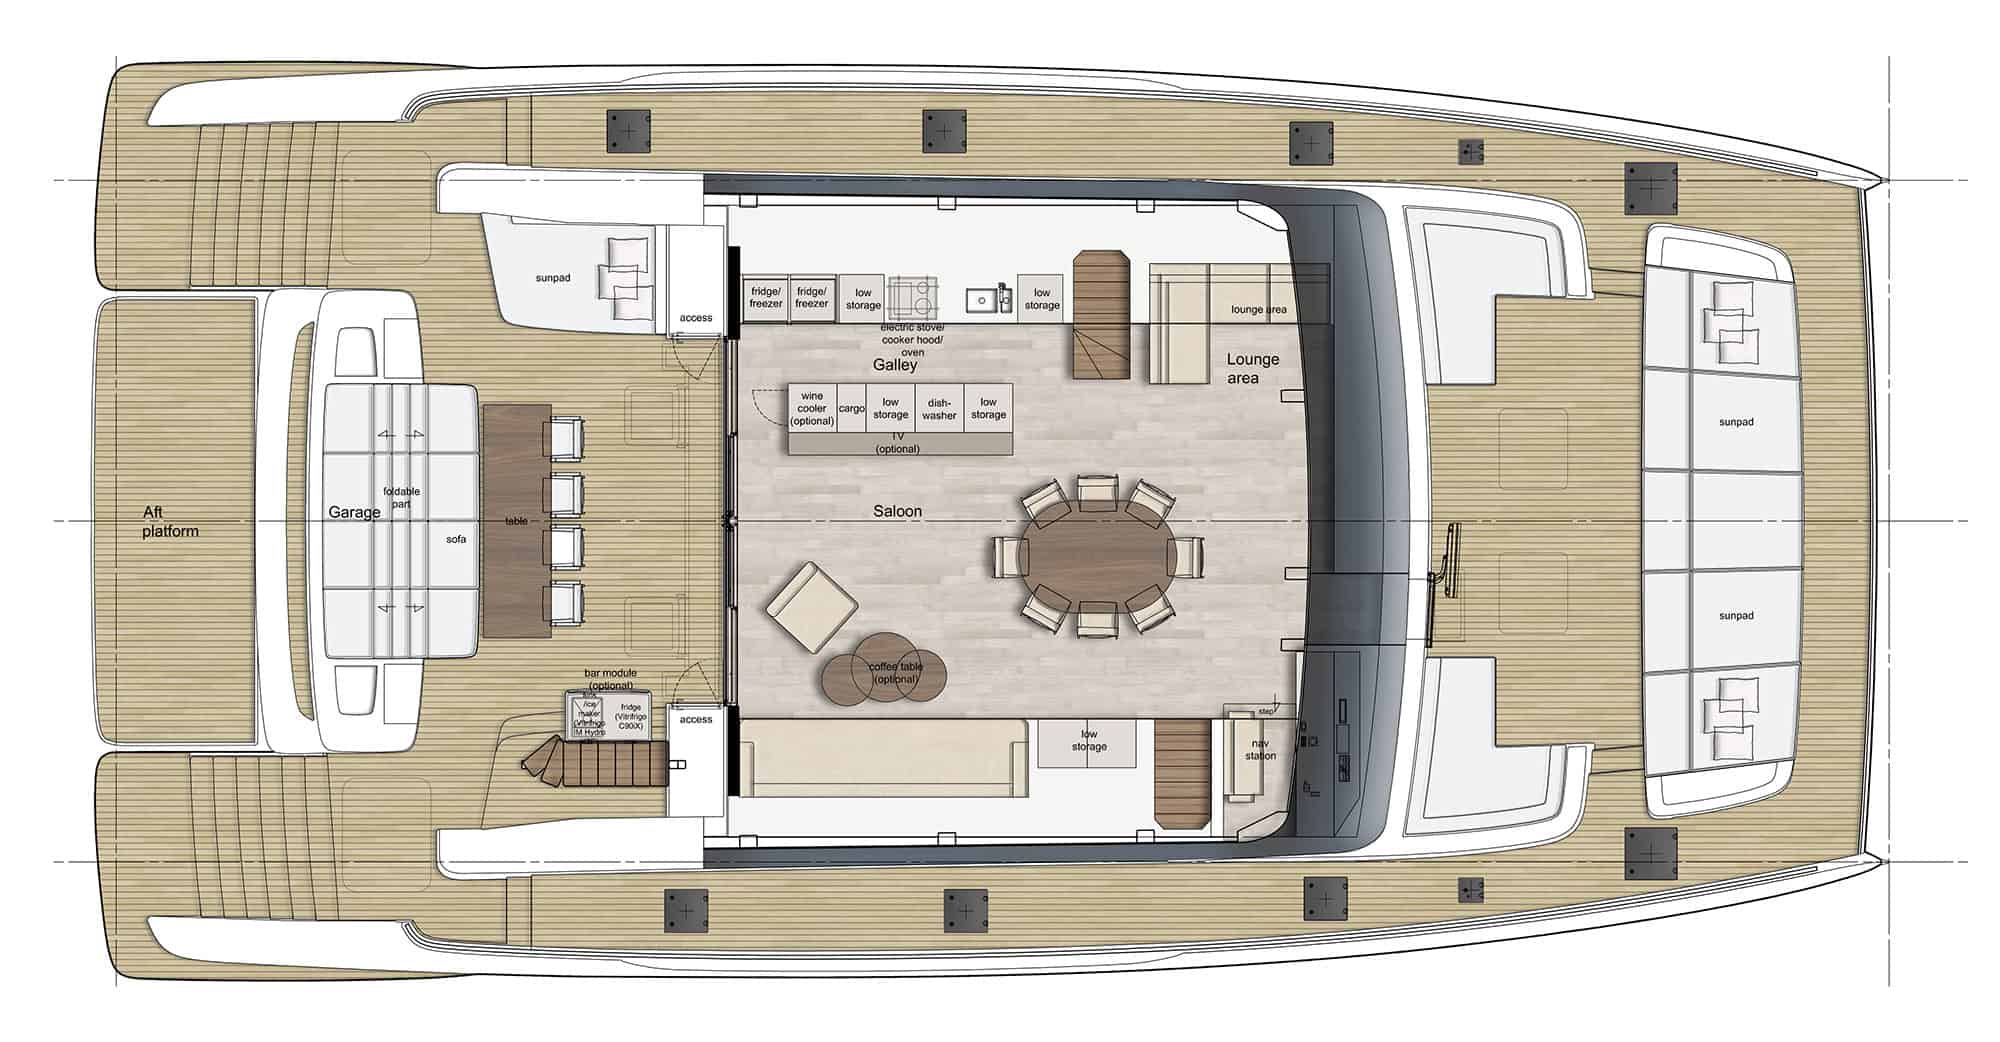 80 sunreef power deckhouse layout option 3